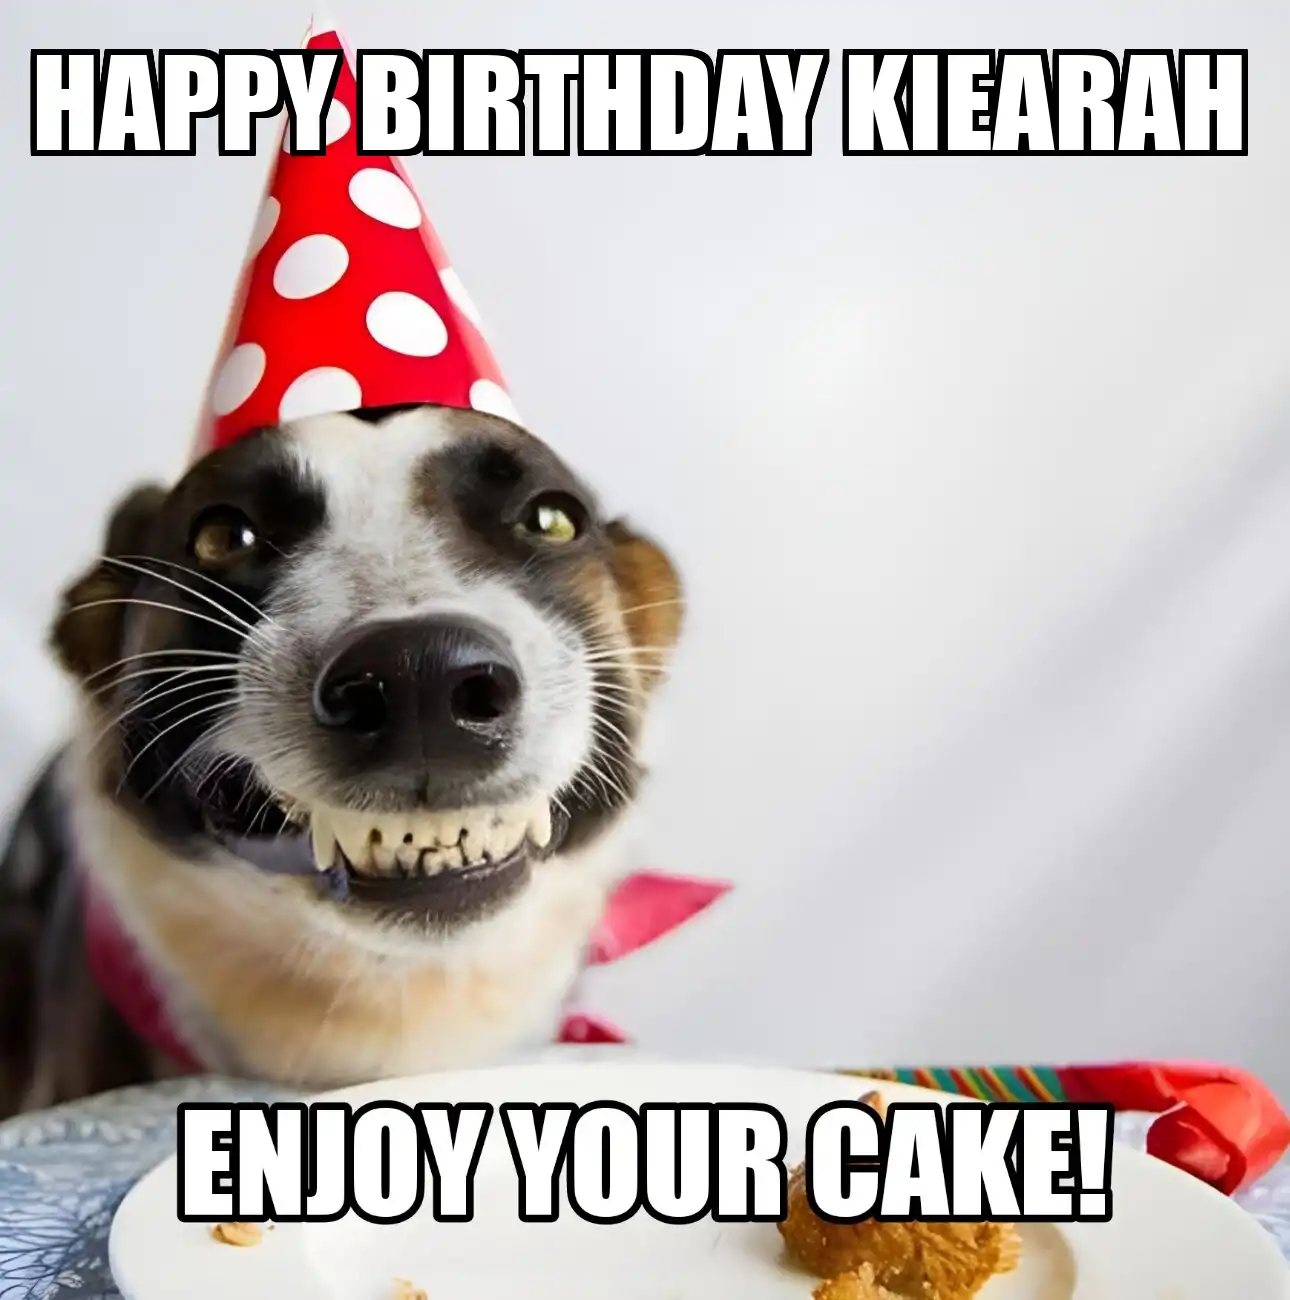 Happy Birthday Kiearah Enjoy Your Cake Dog Meme